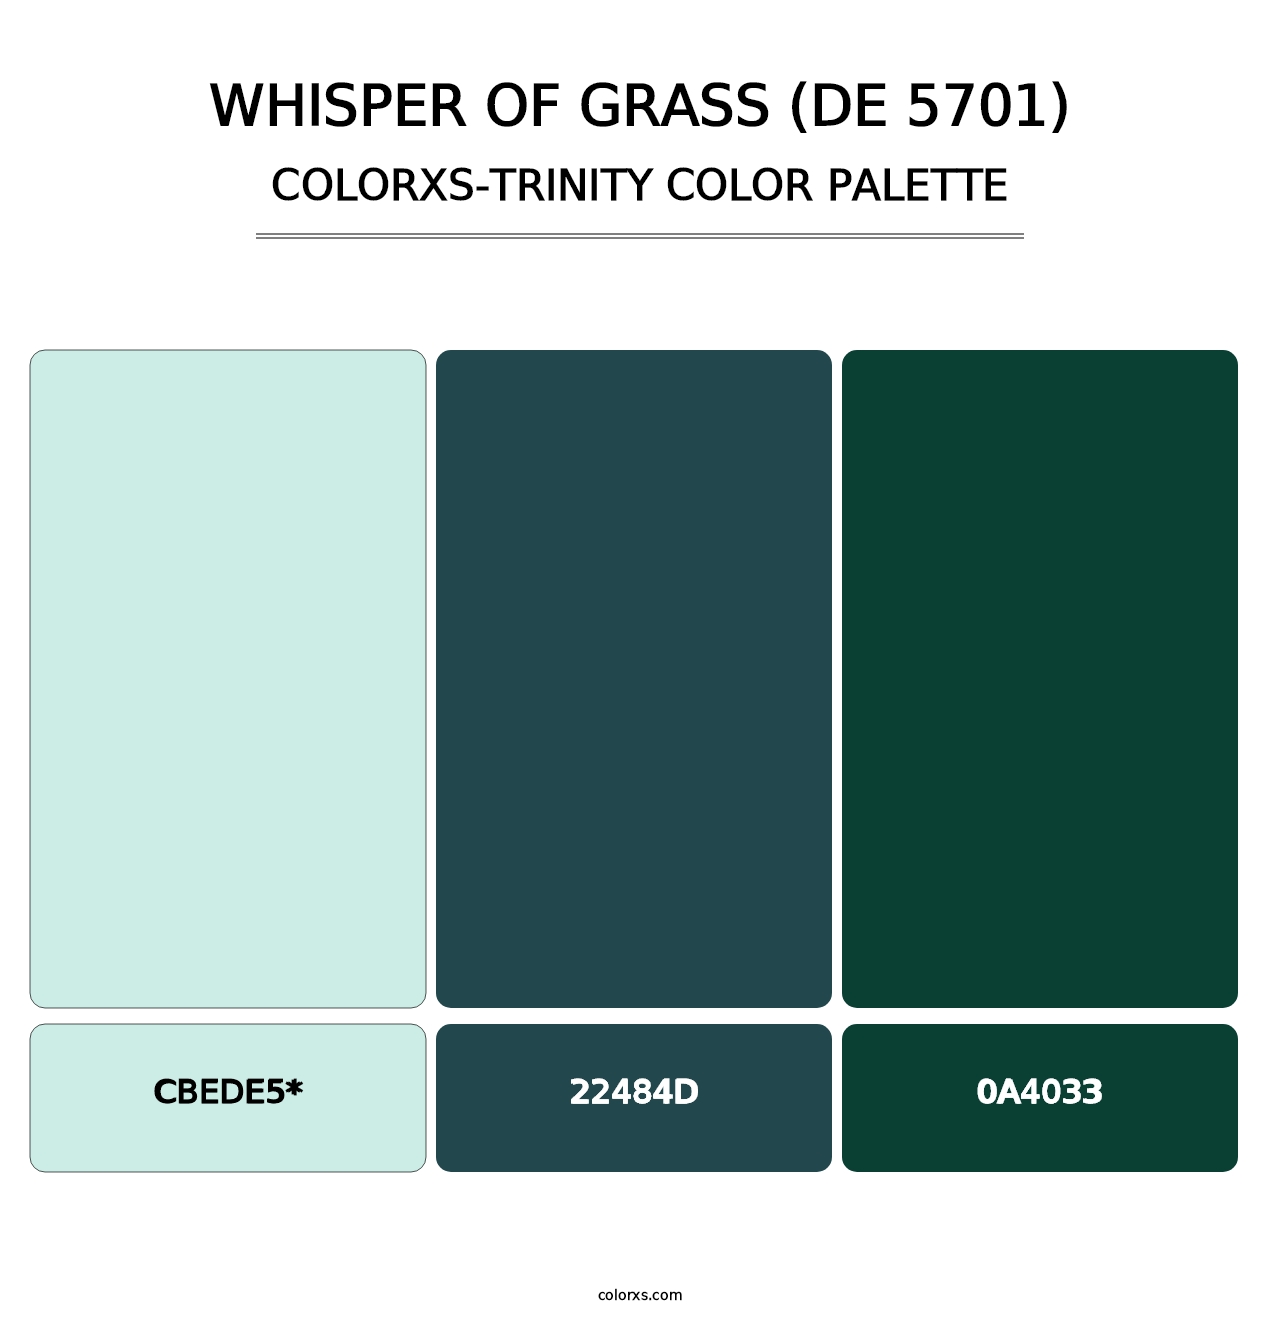 Whisper of Grass (DE 5701) - Colorxs Trinity Palette